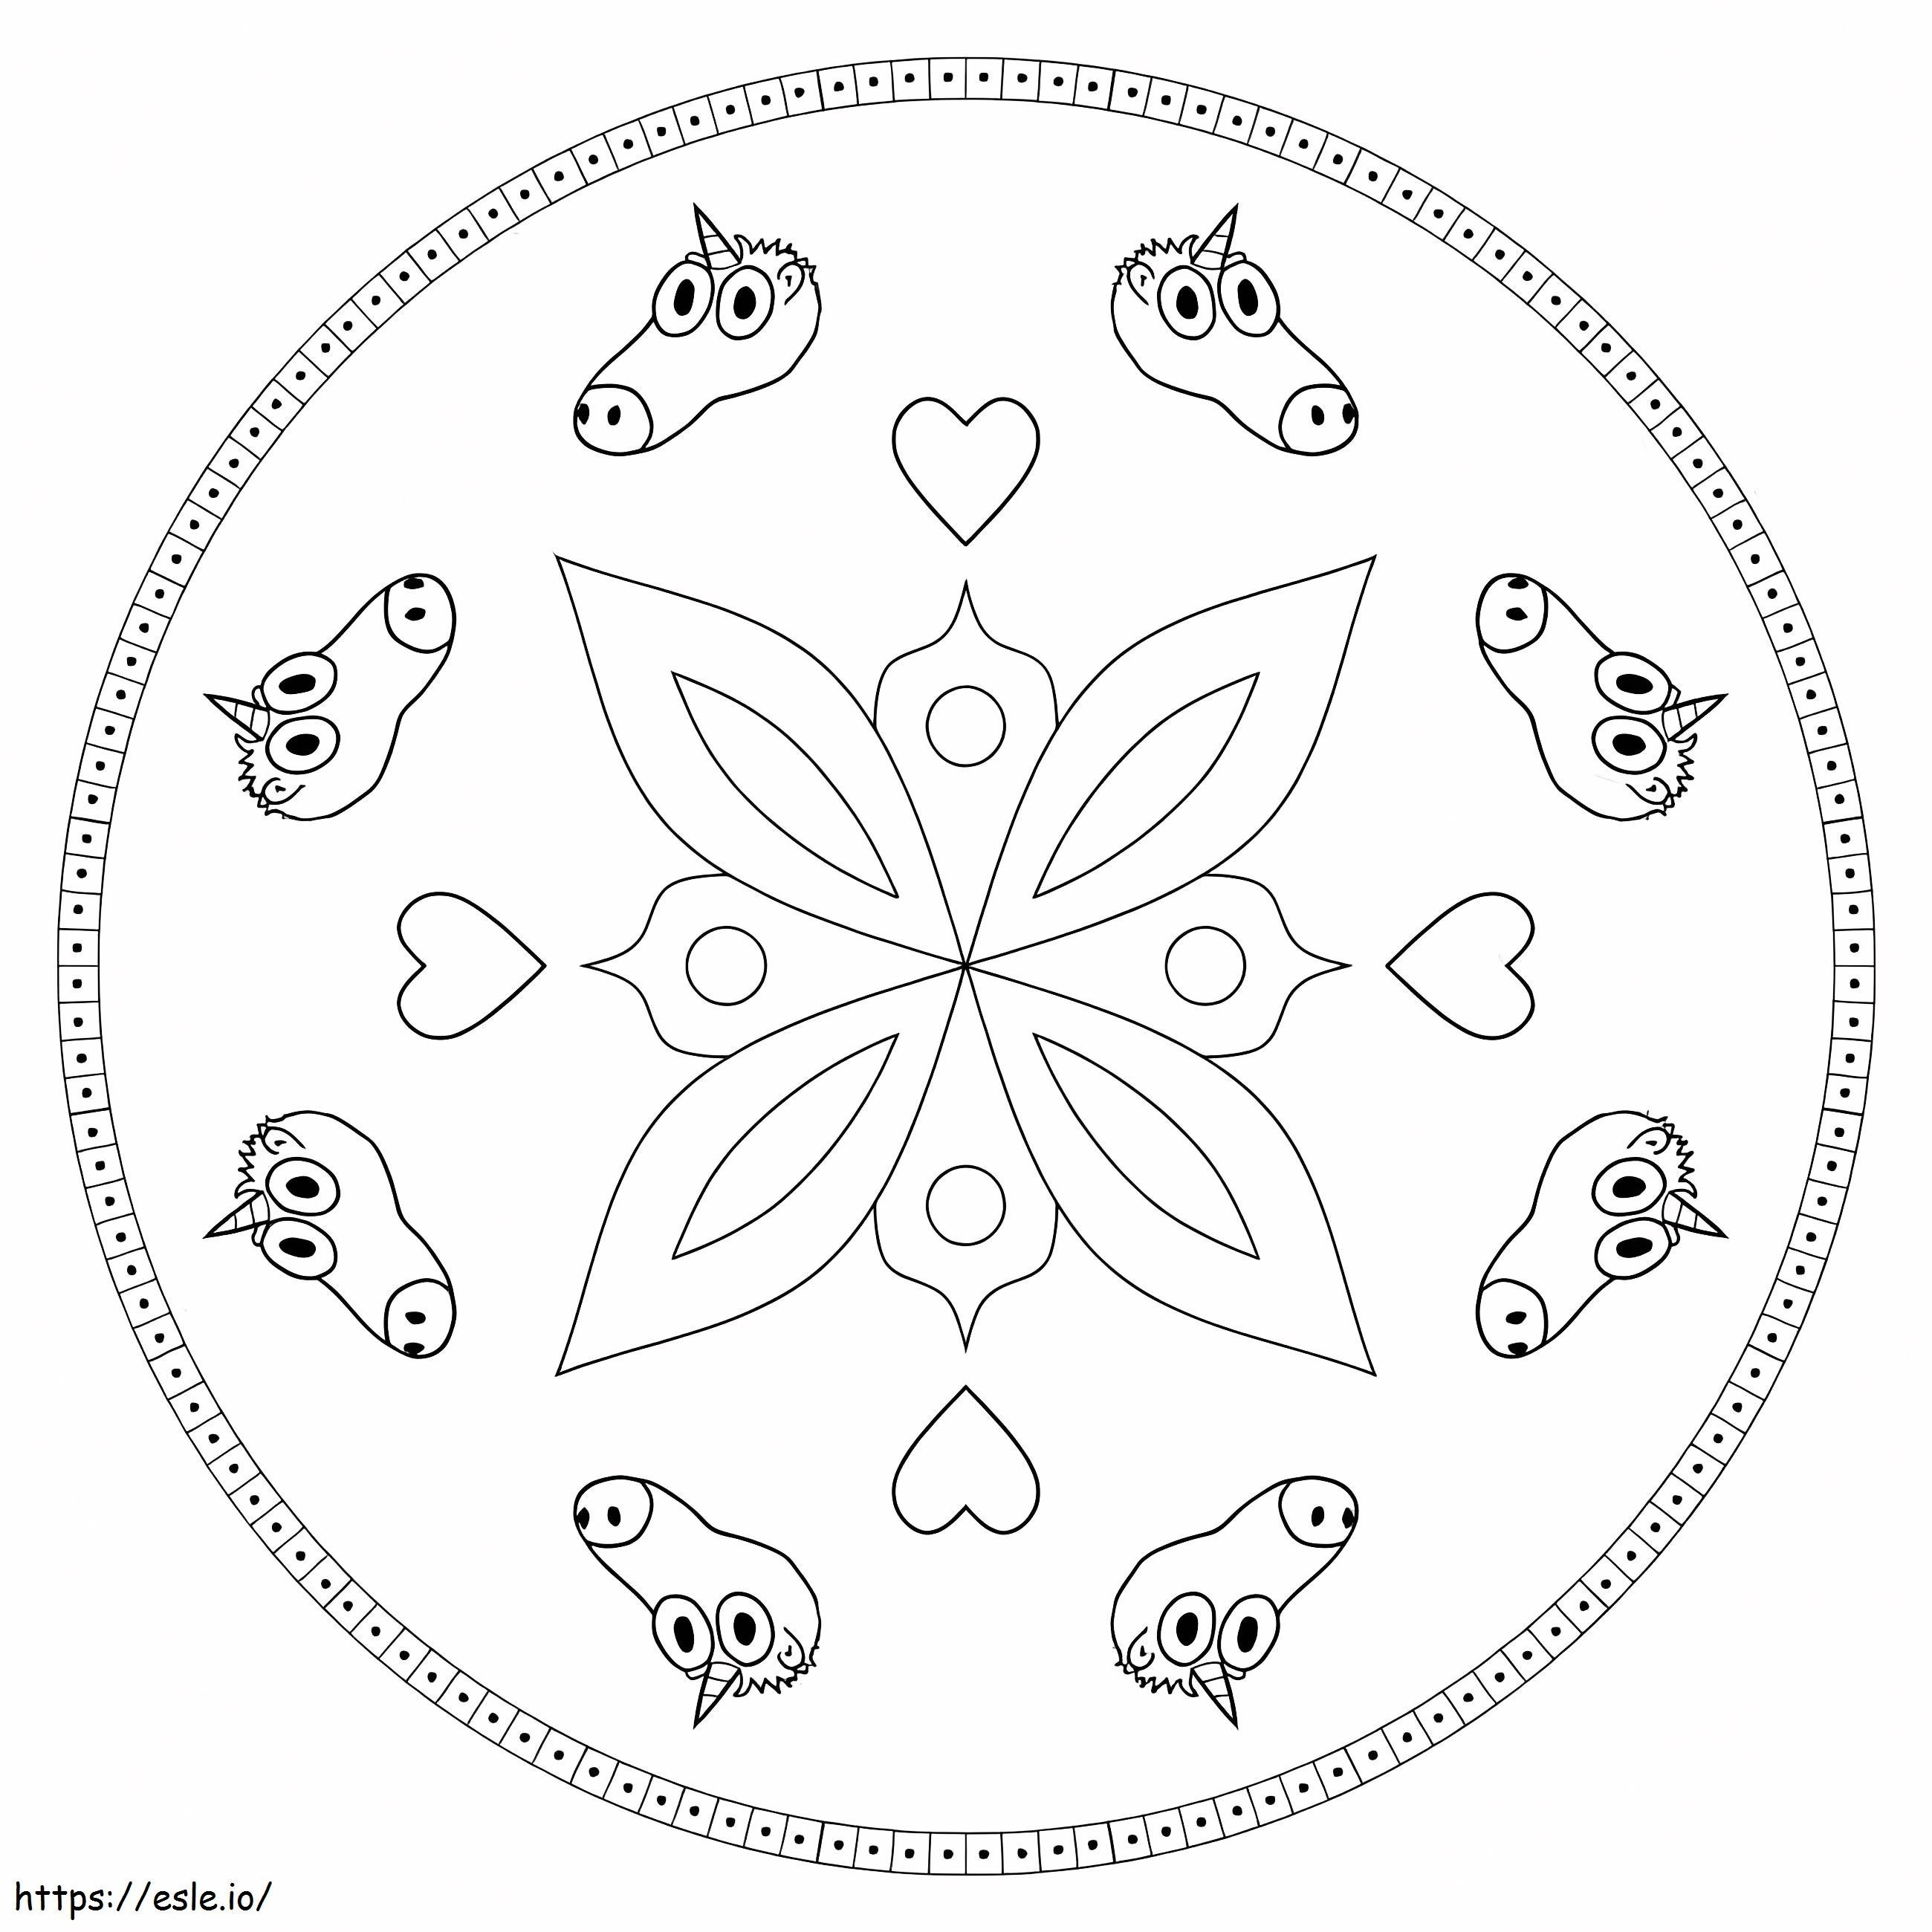 Mandala Jednorożec 16 kolorowanka